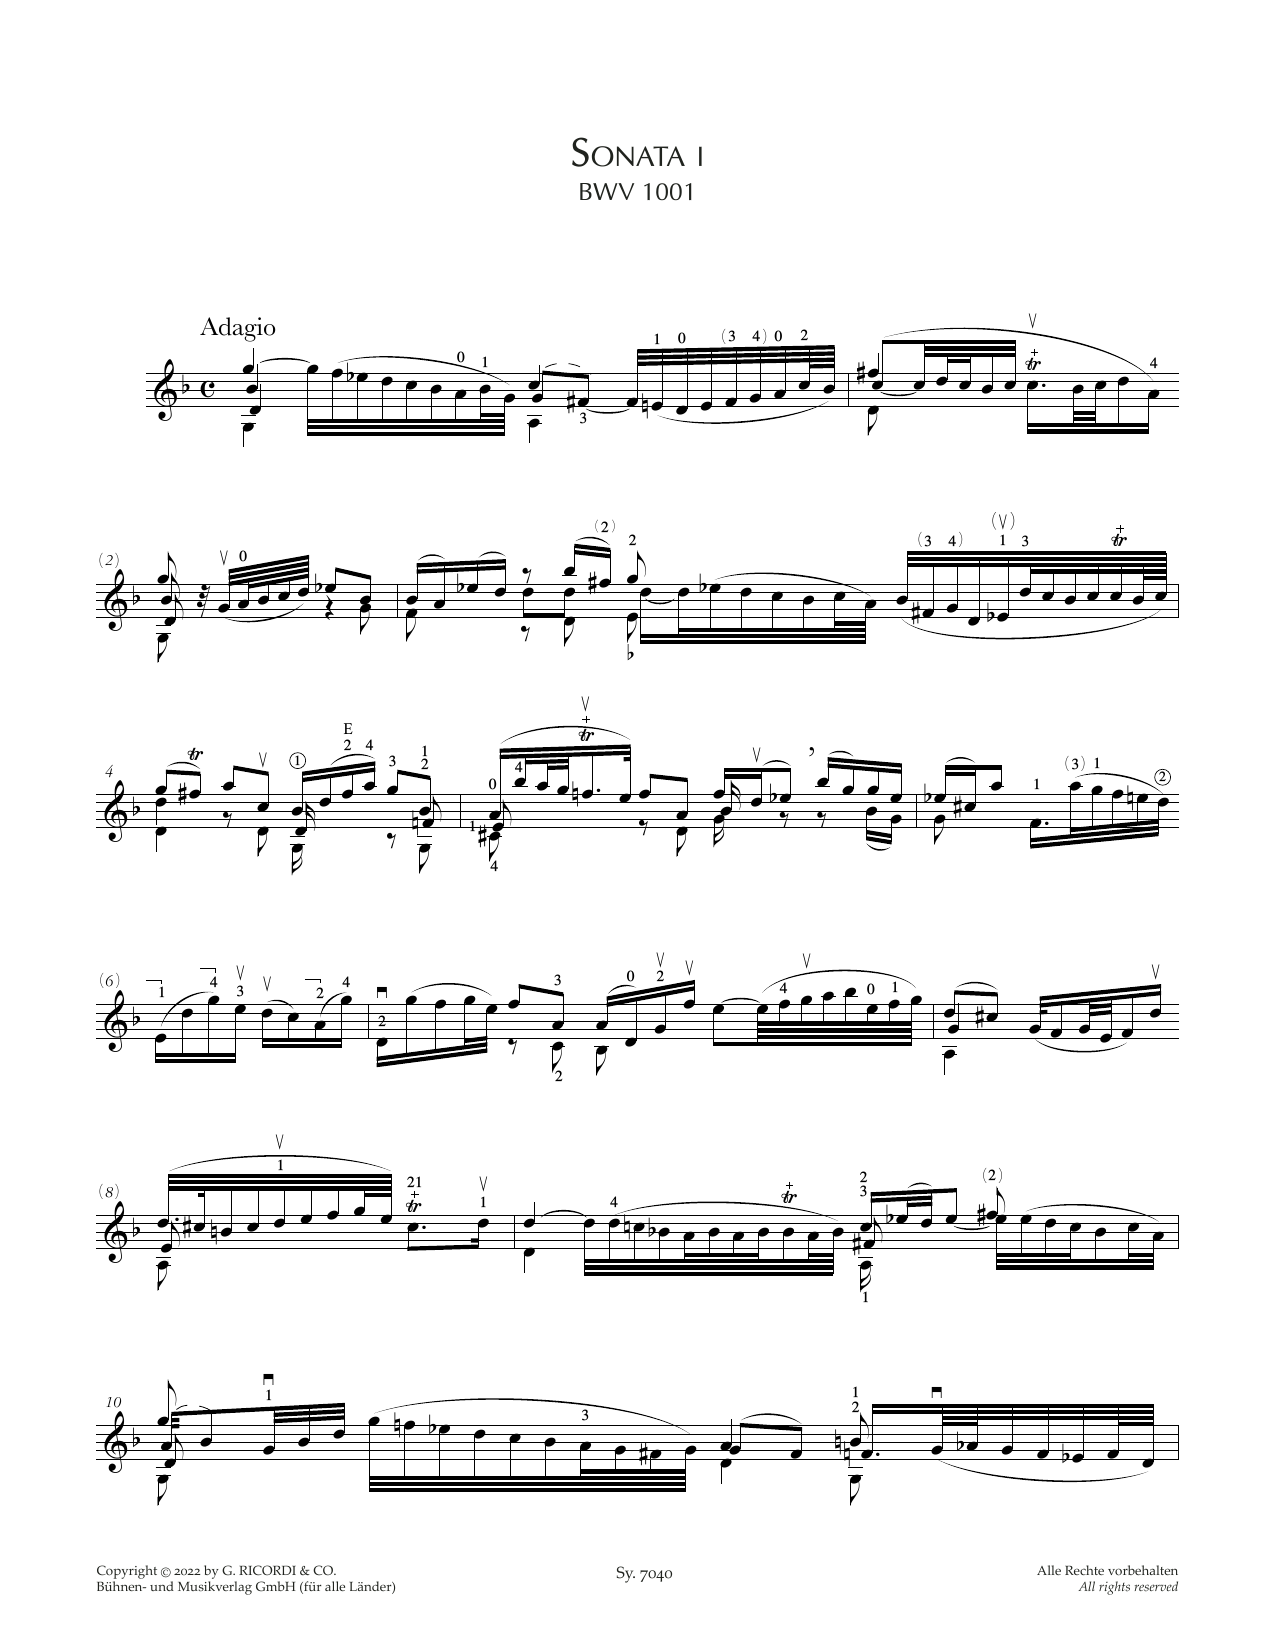 Johann Sebastian Bach Sonata I, BWV 1001 Sheet Music Notes & Chords for Violin Solo - Download or Print PDF